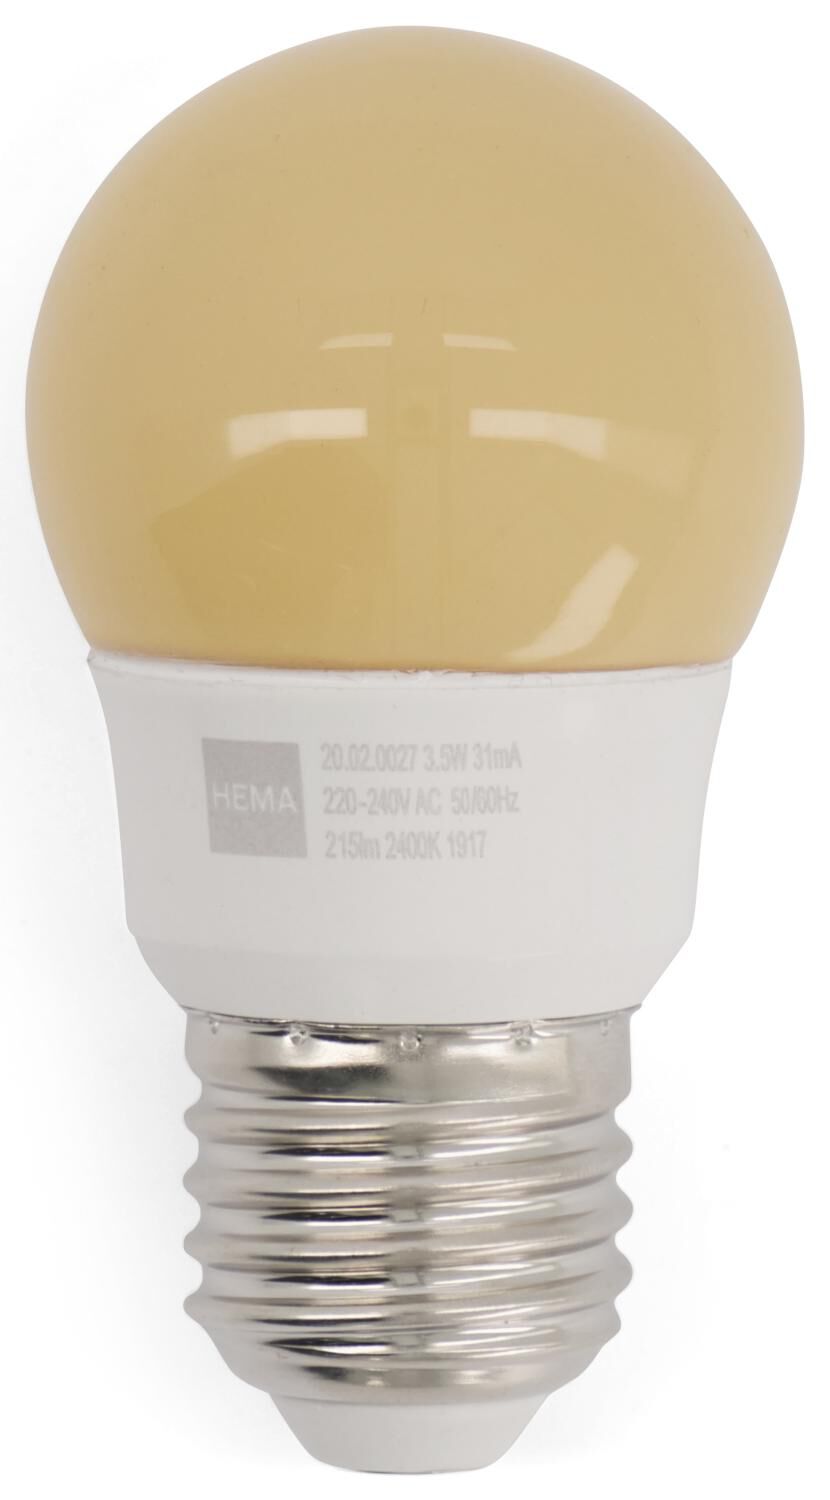 Blauwdruk Aannames, aannames. Raad eens Higgins HEMA LED Lamp 22W - 215 Lm - Kogel - Flame (wit) van HEMA - Makeover.nl